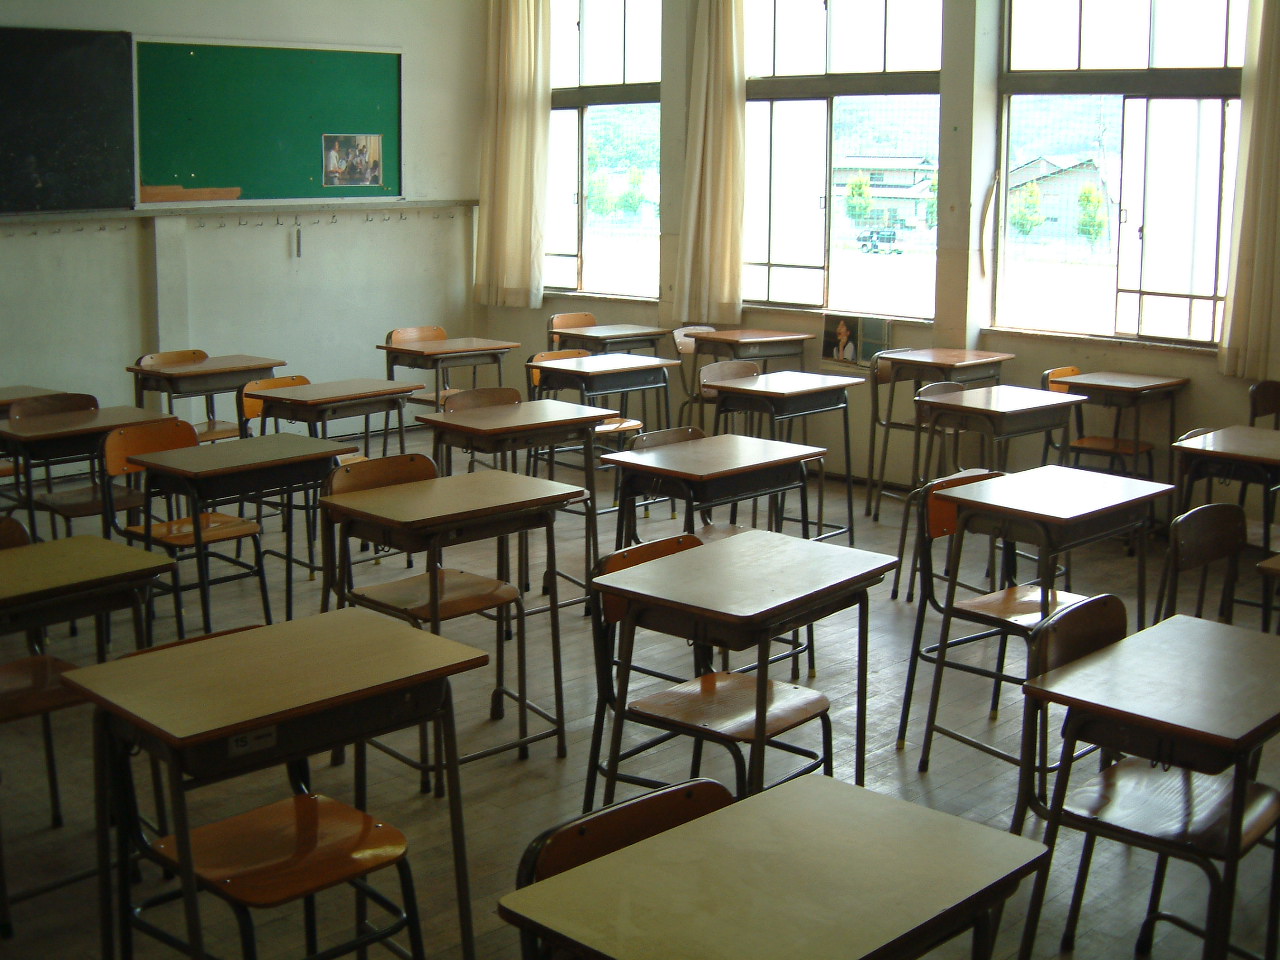 Convoca a Asamblea Ciudadana a recomendar reformas de patronazgo escolar